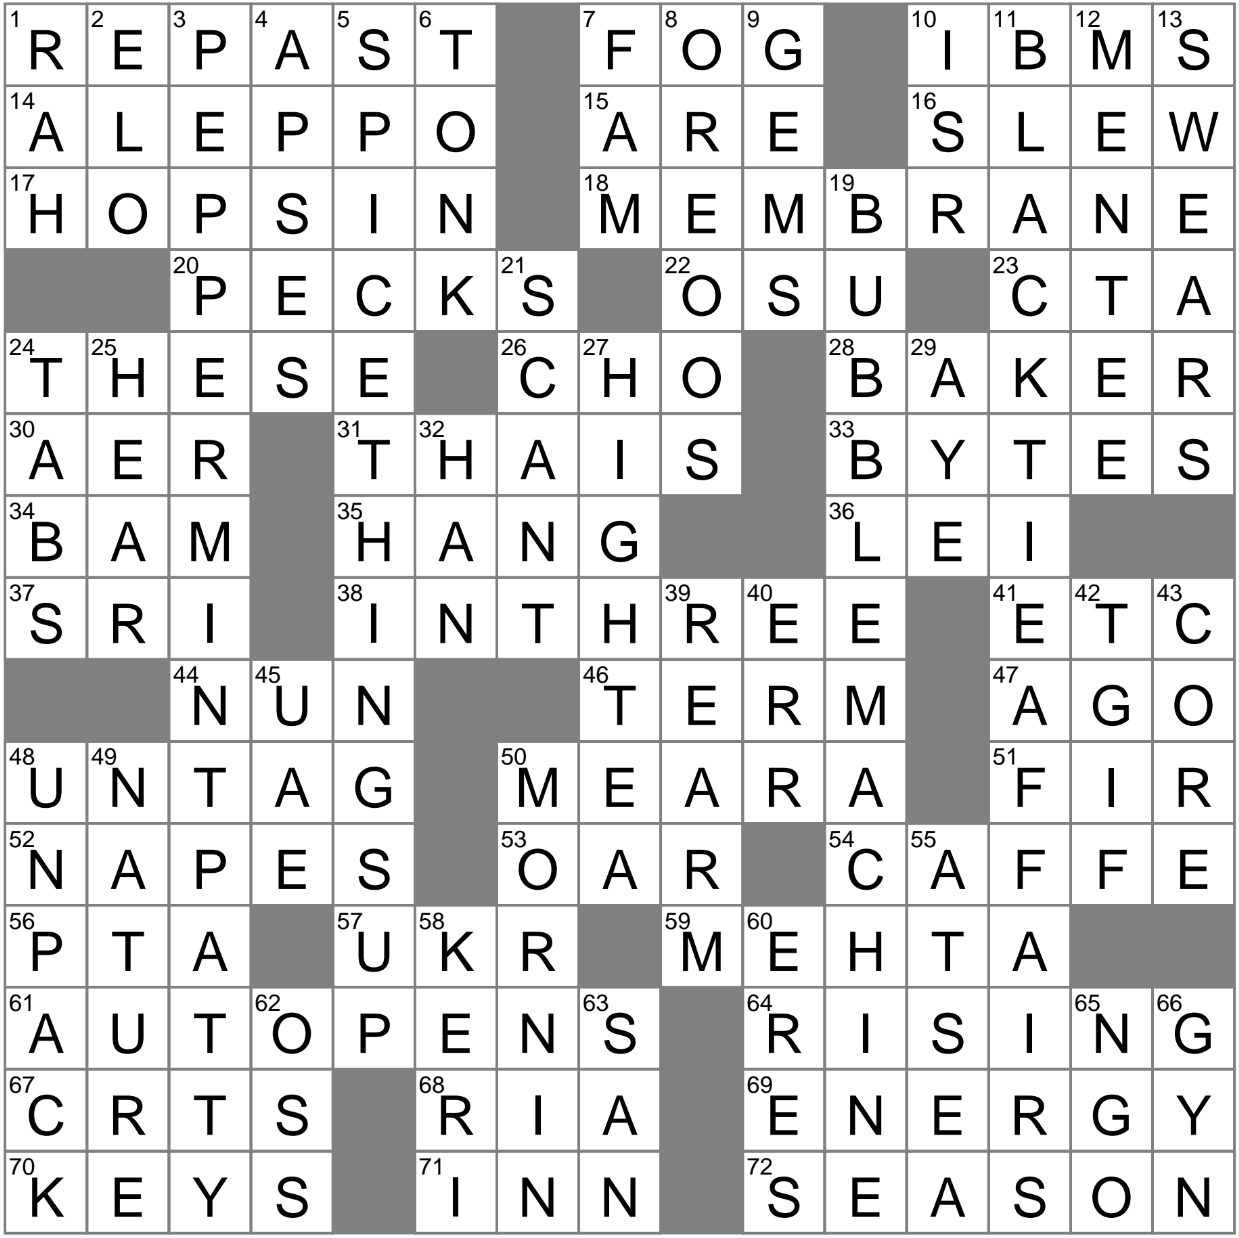 LA Times Crossword 15 Mar 23 Wednesday LAXCrossword com